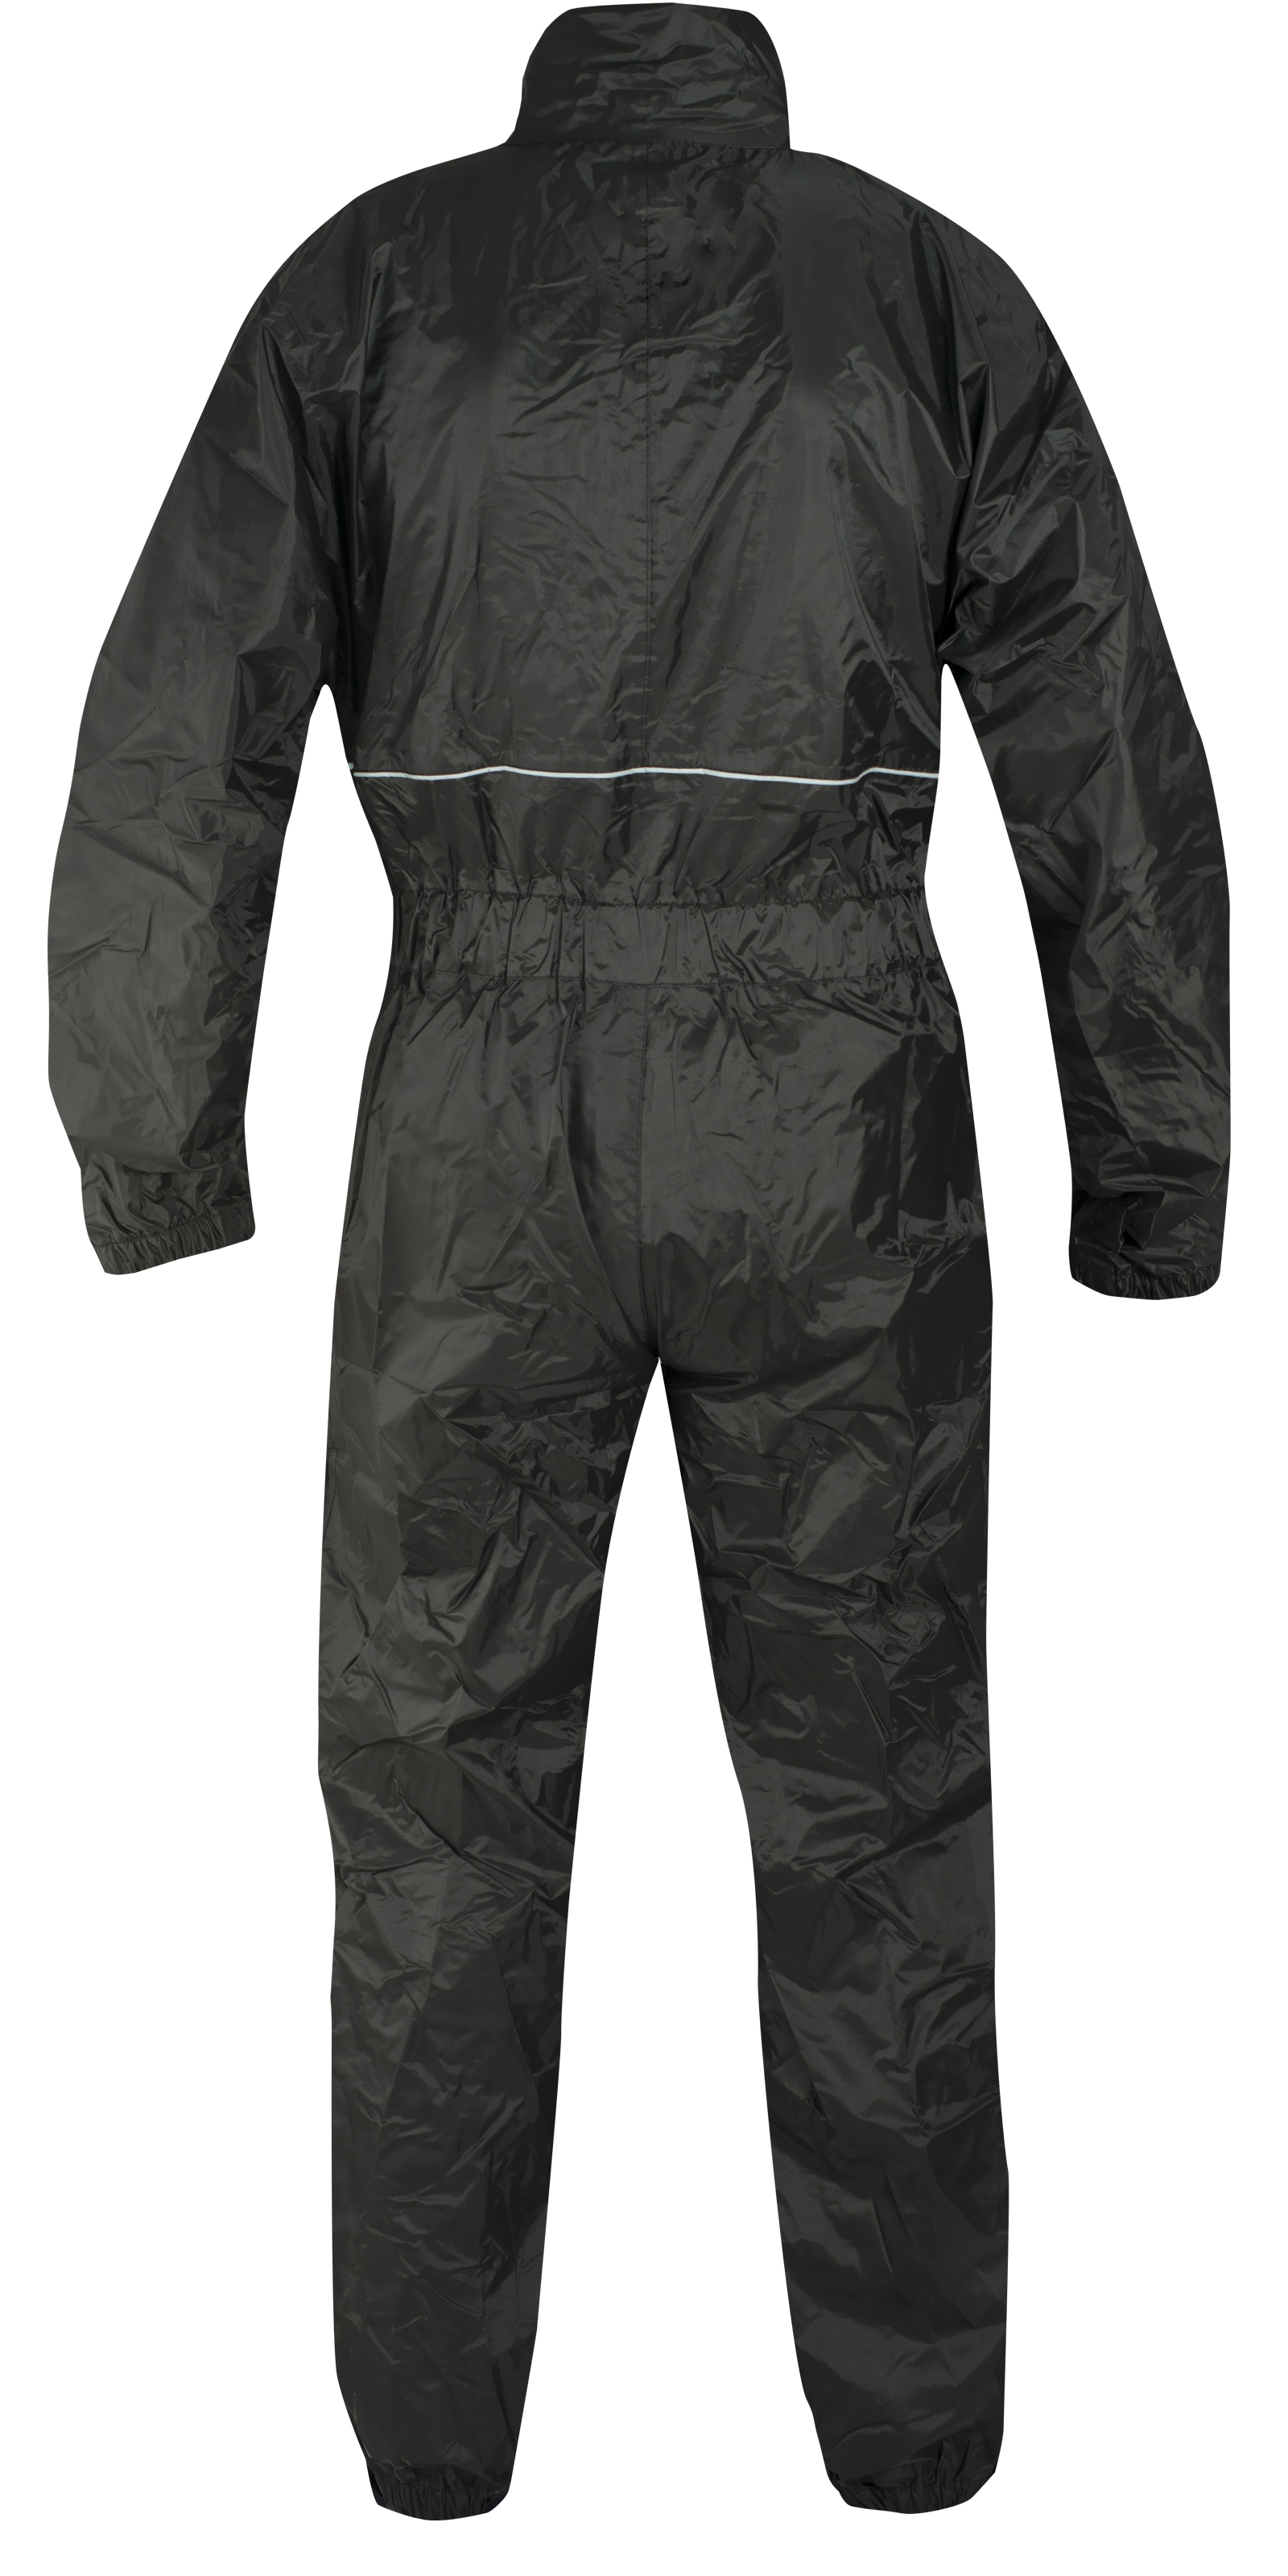 A-Pro Waterproof Motorcycle Suit Black L